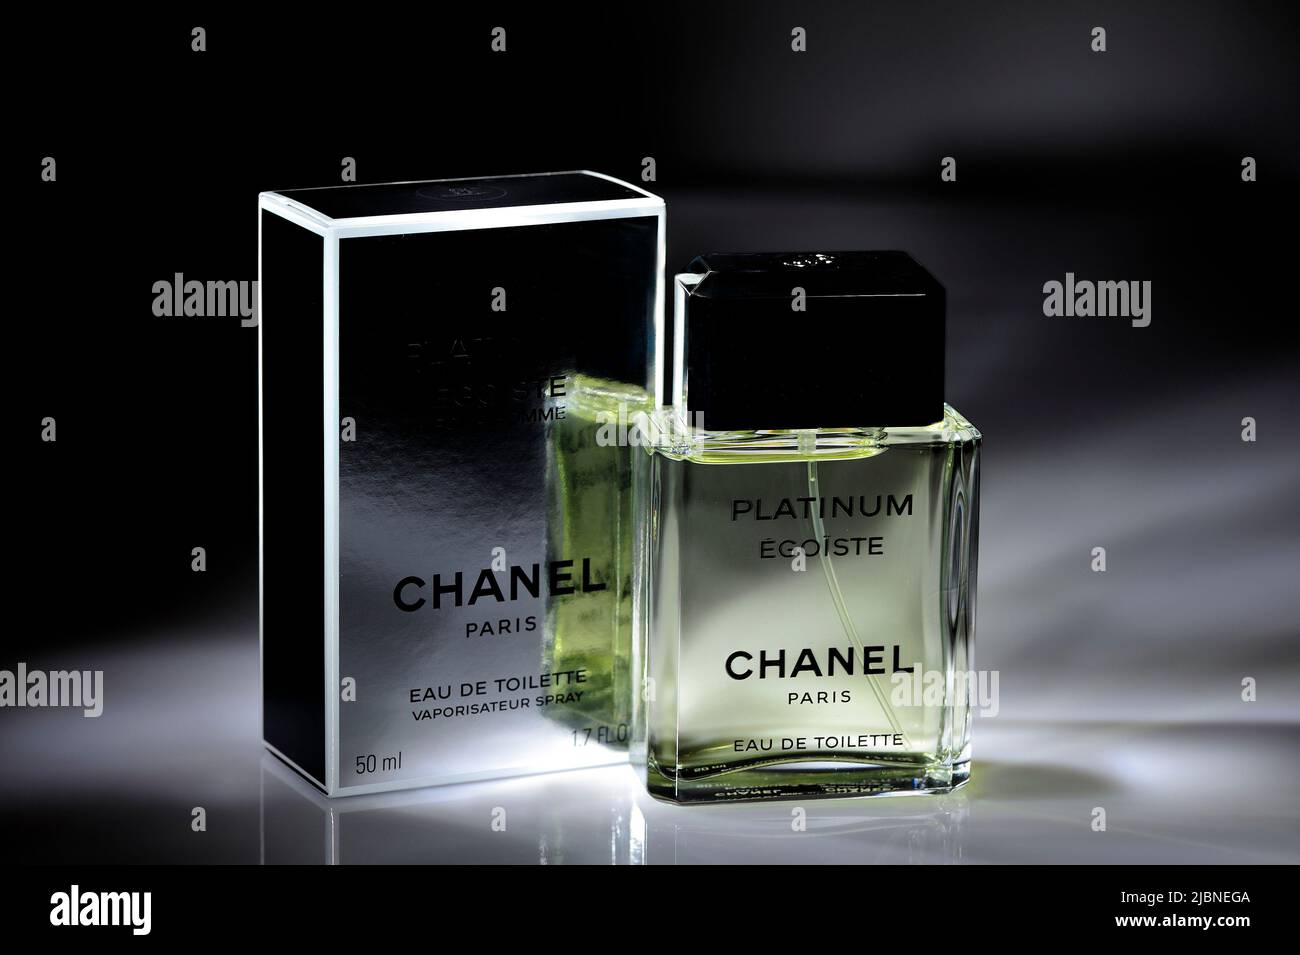 Chanel platinum egoiste hi-res stock photography and images - Alamy